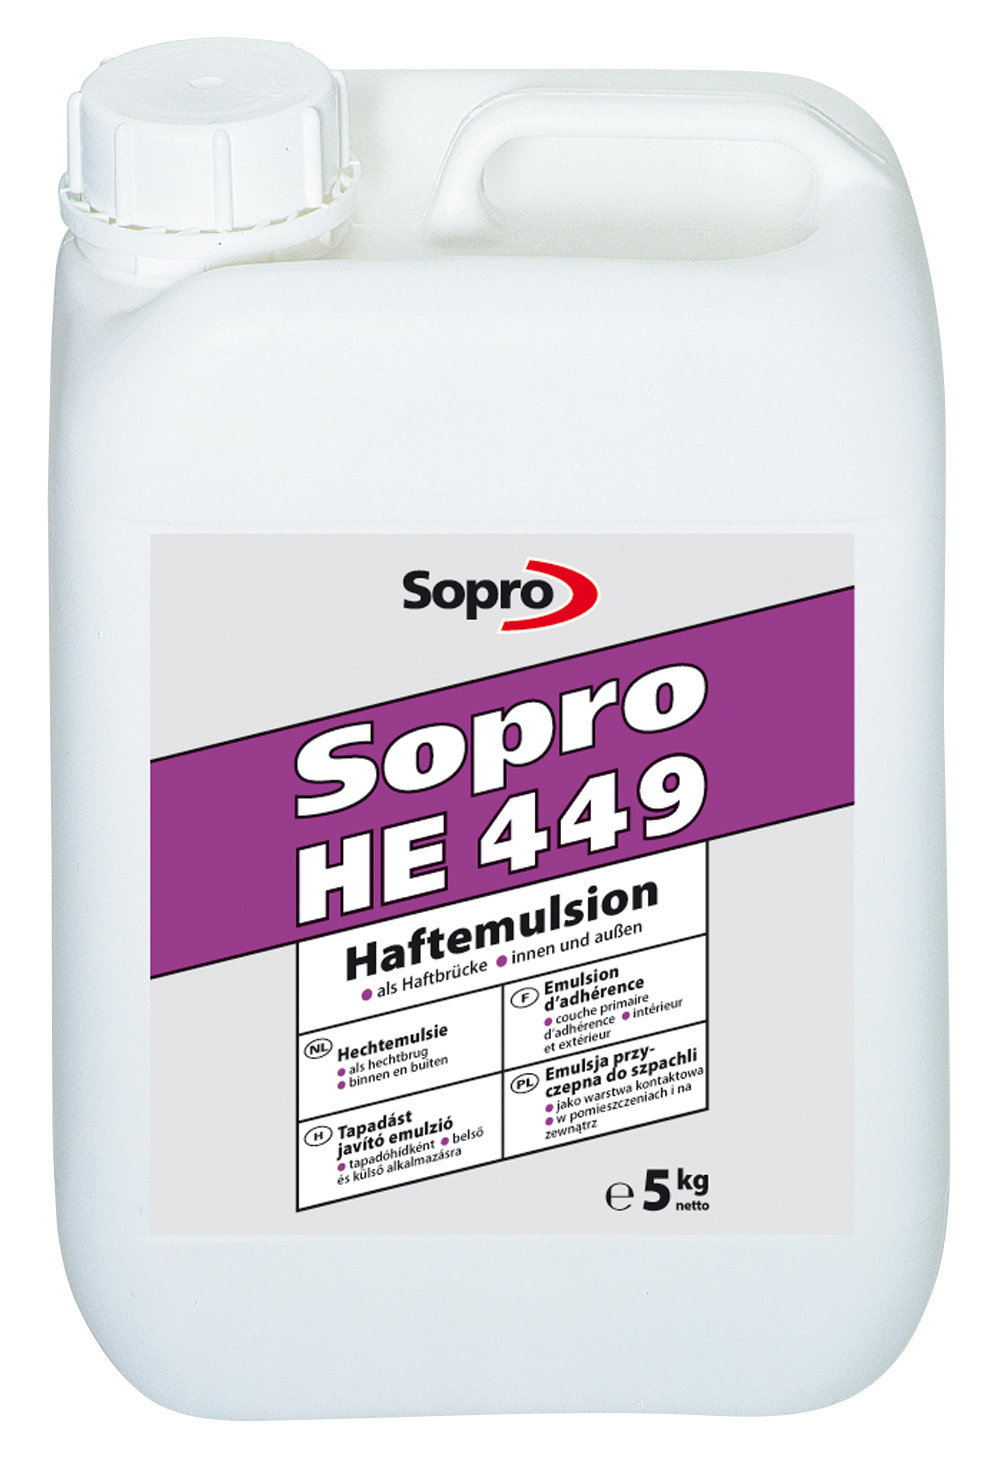 Sopro Haftemulsion HE 449